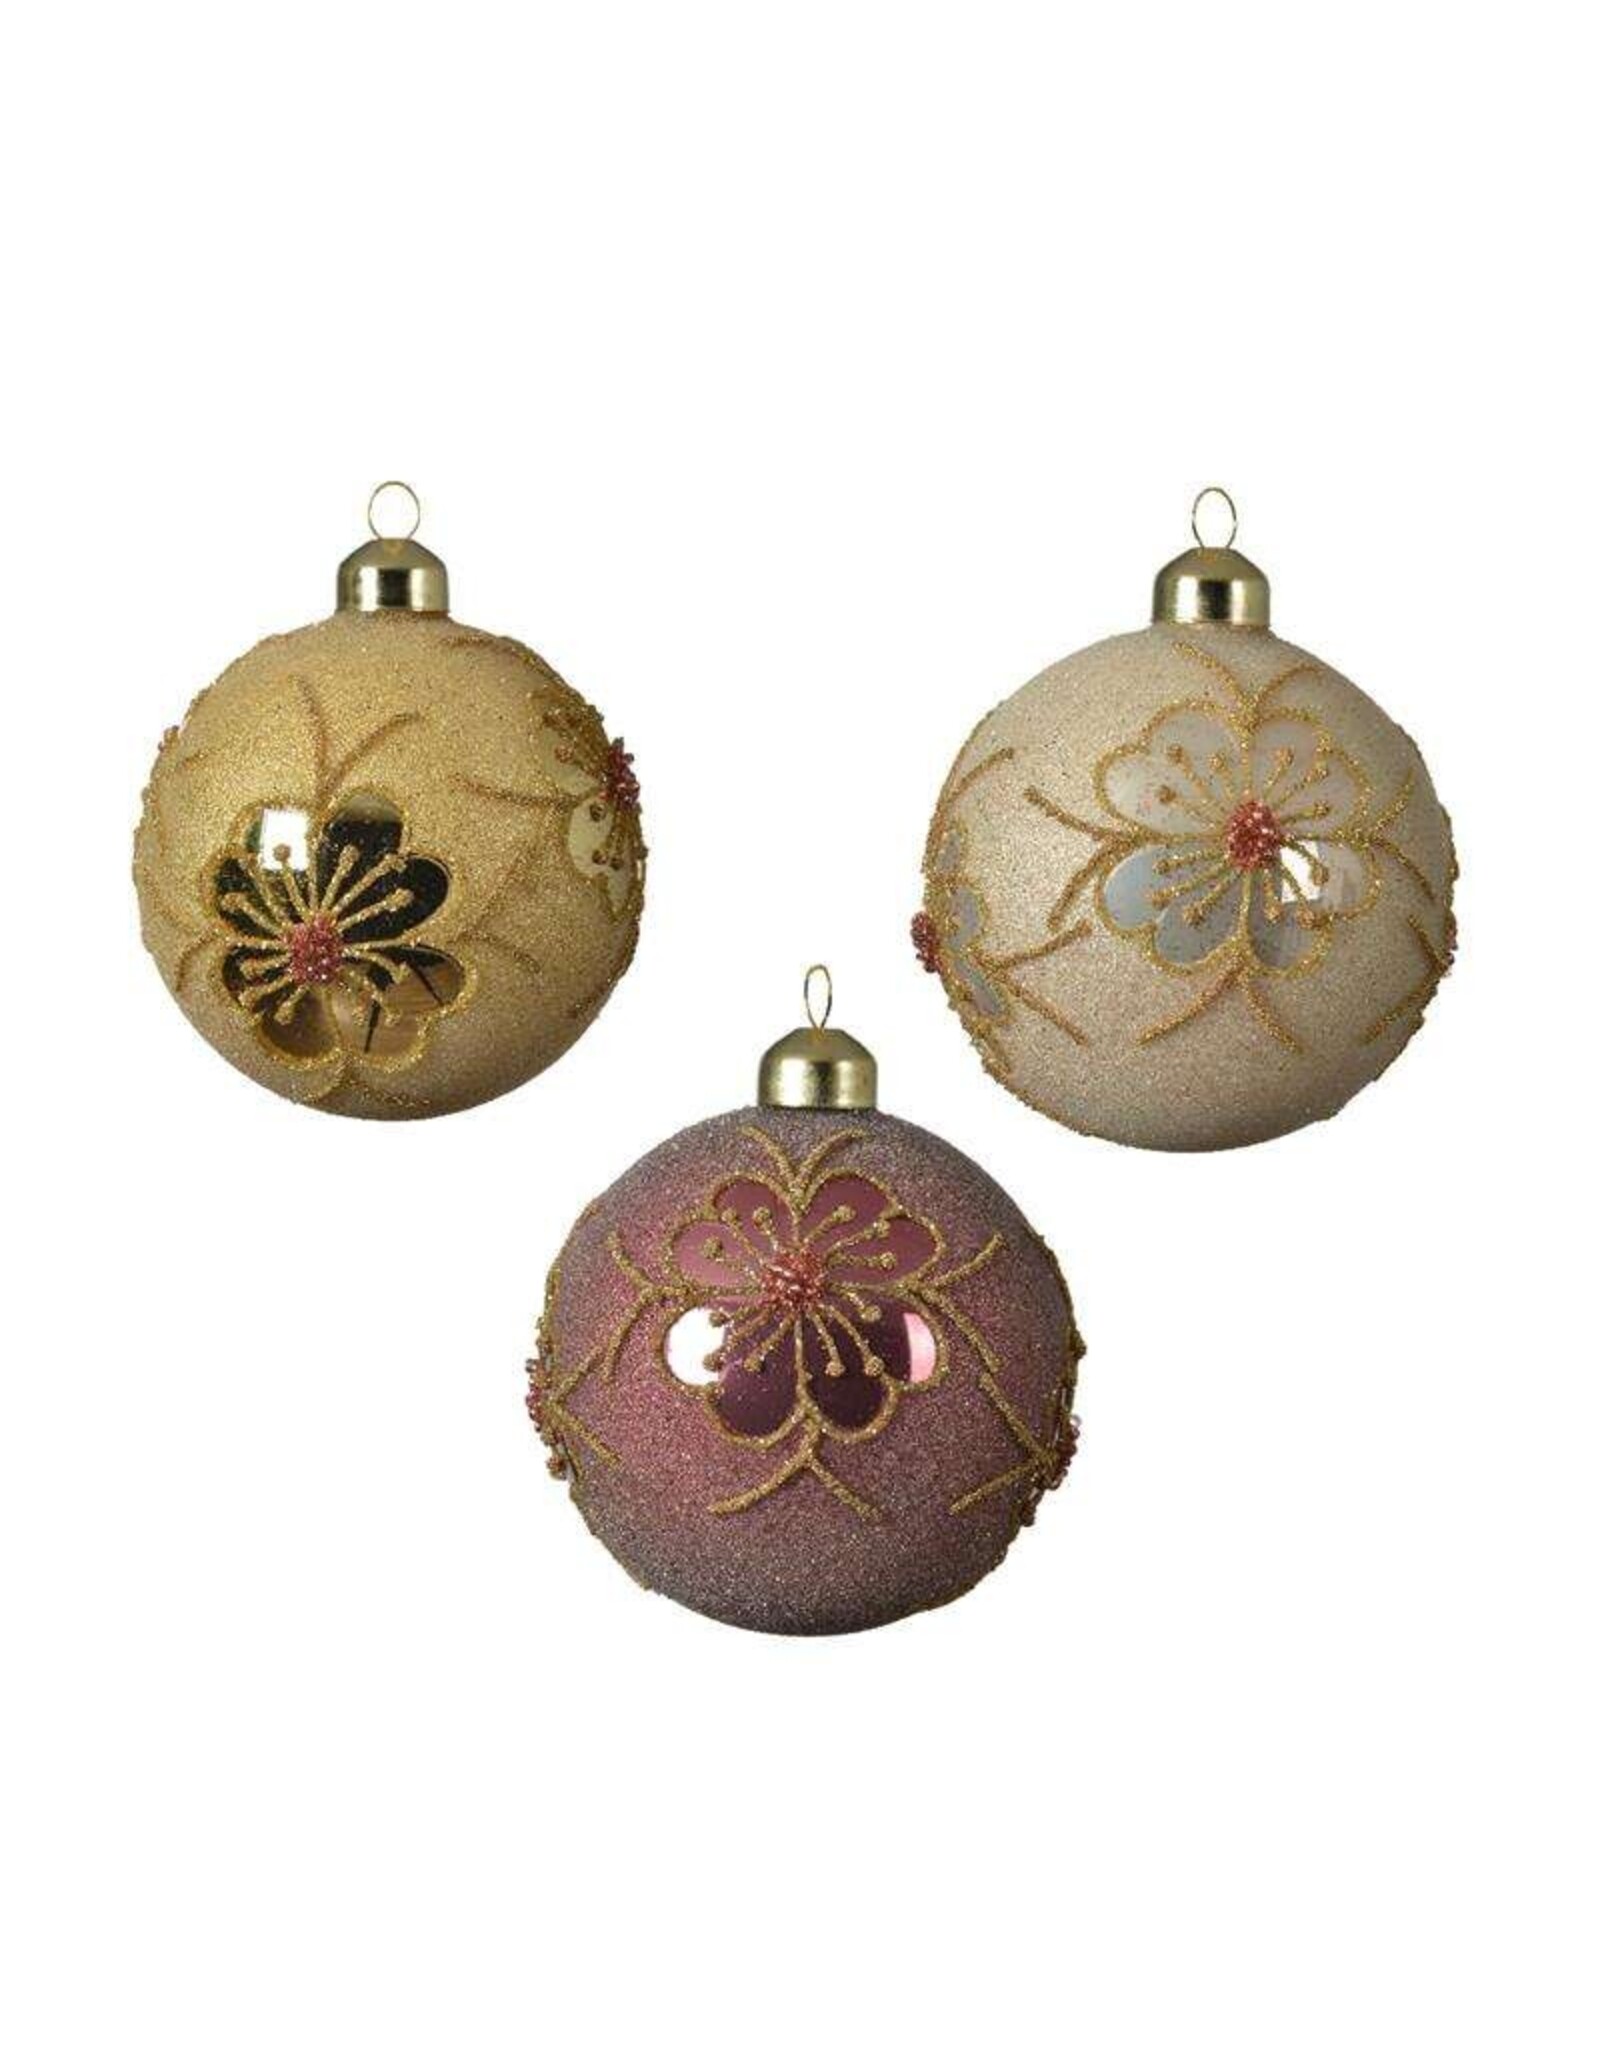 Decoris Decoris Kerstballenset a 3 stuks roze 8cm glas